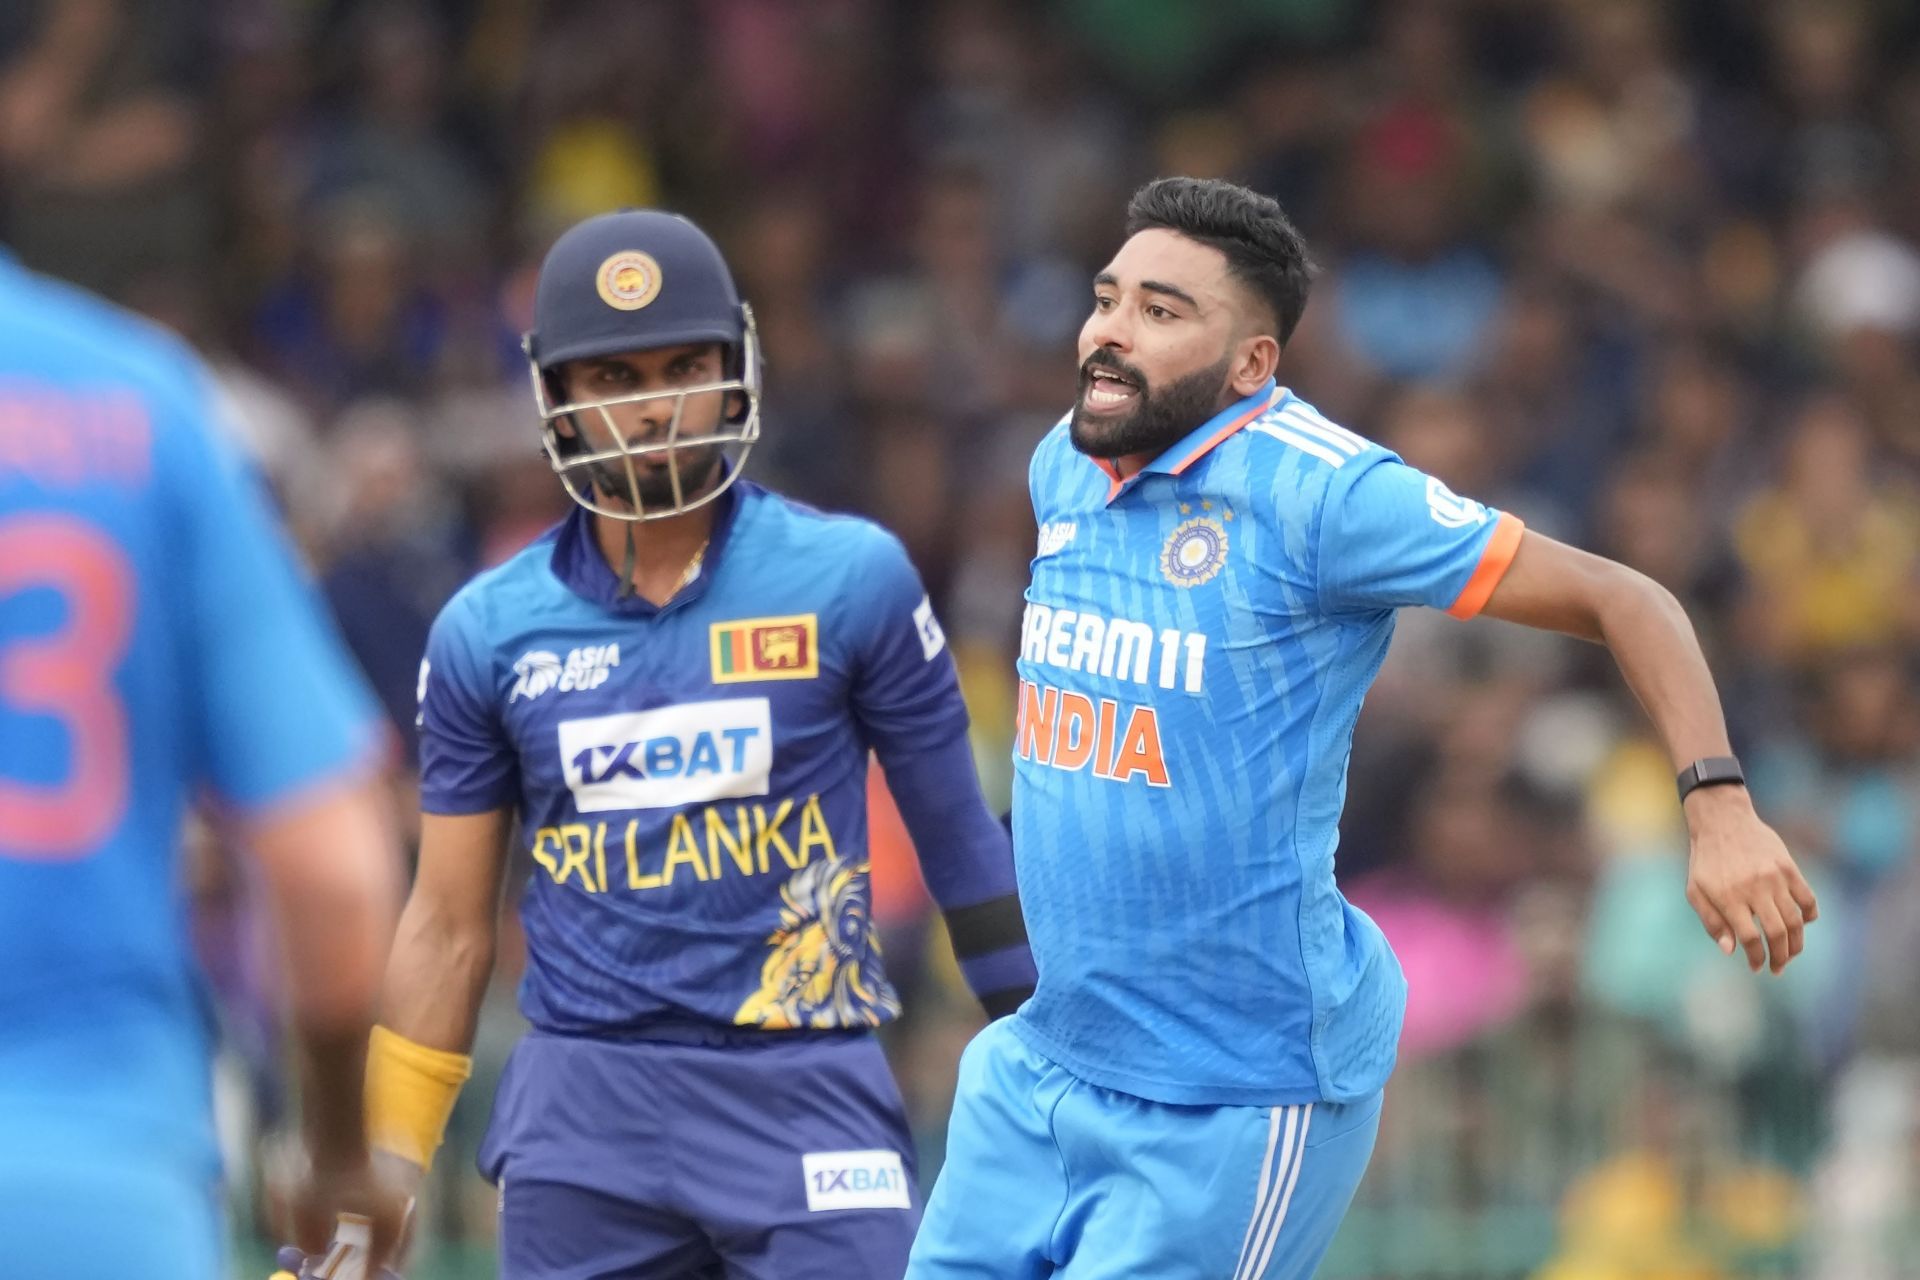 Siraj destroyed Sri Lanka with an exhilarating spell